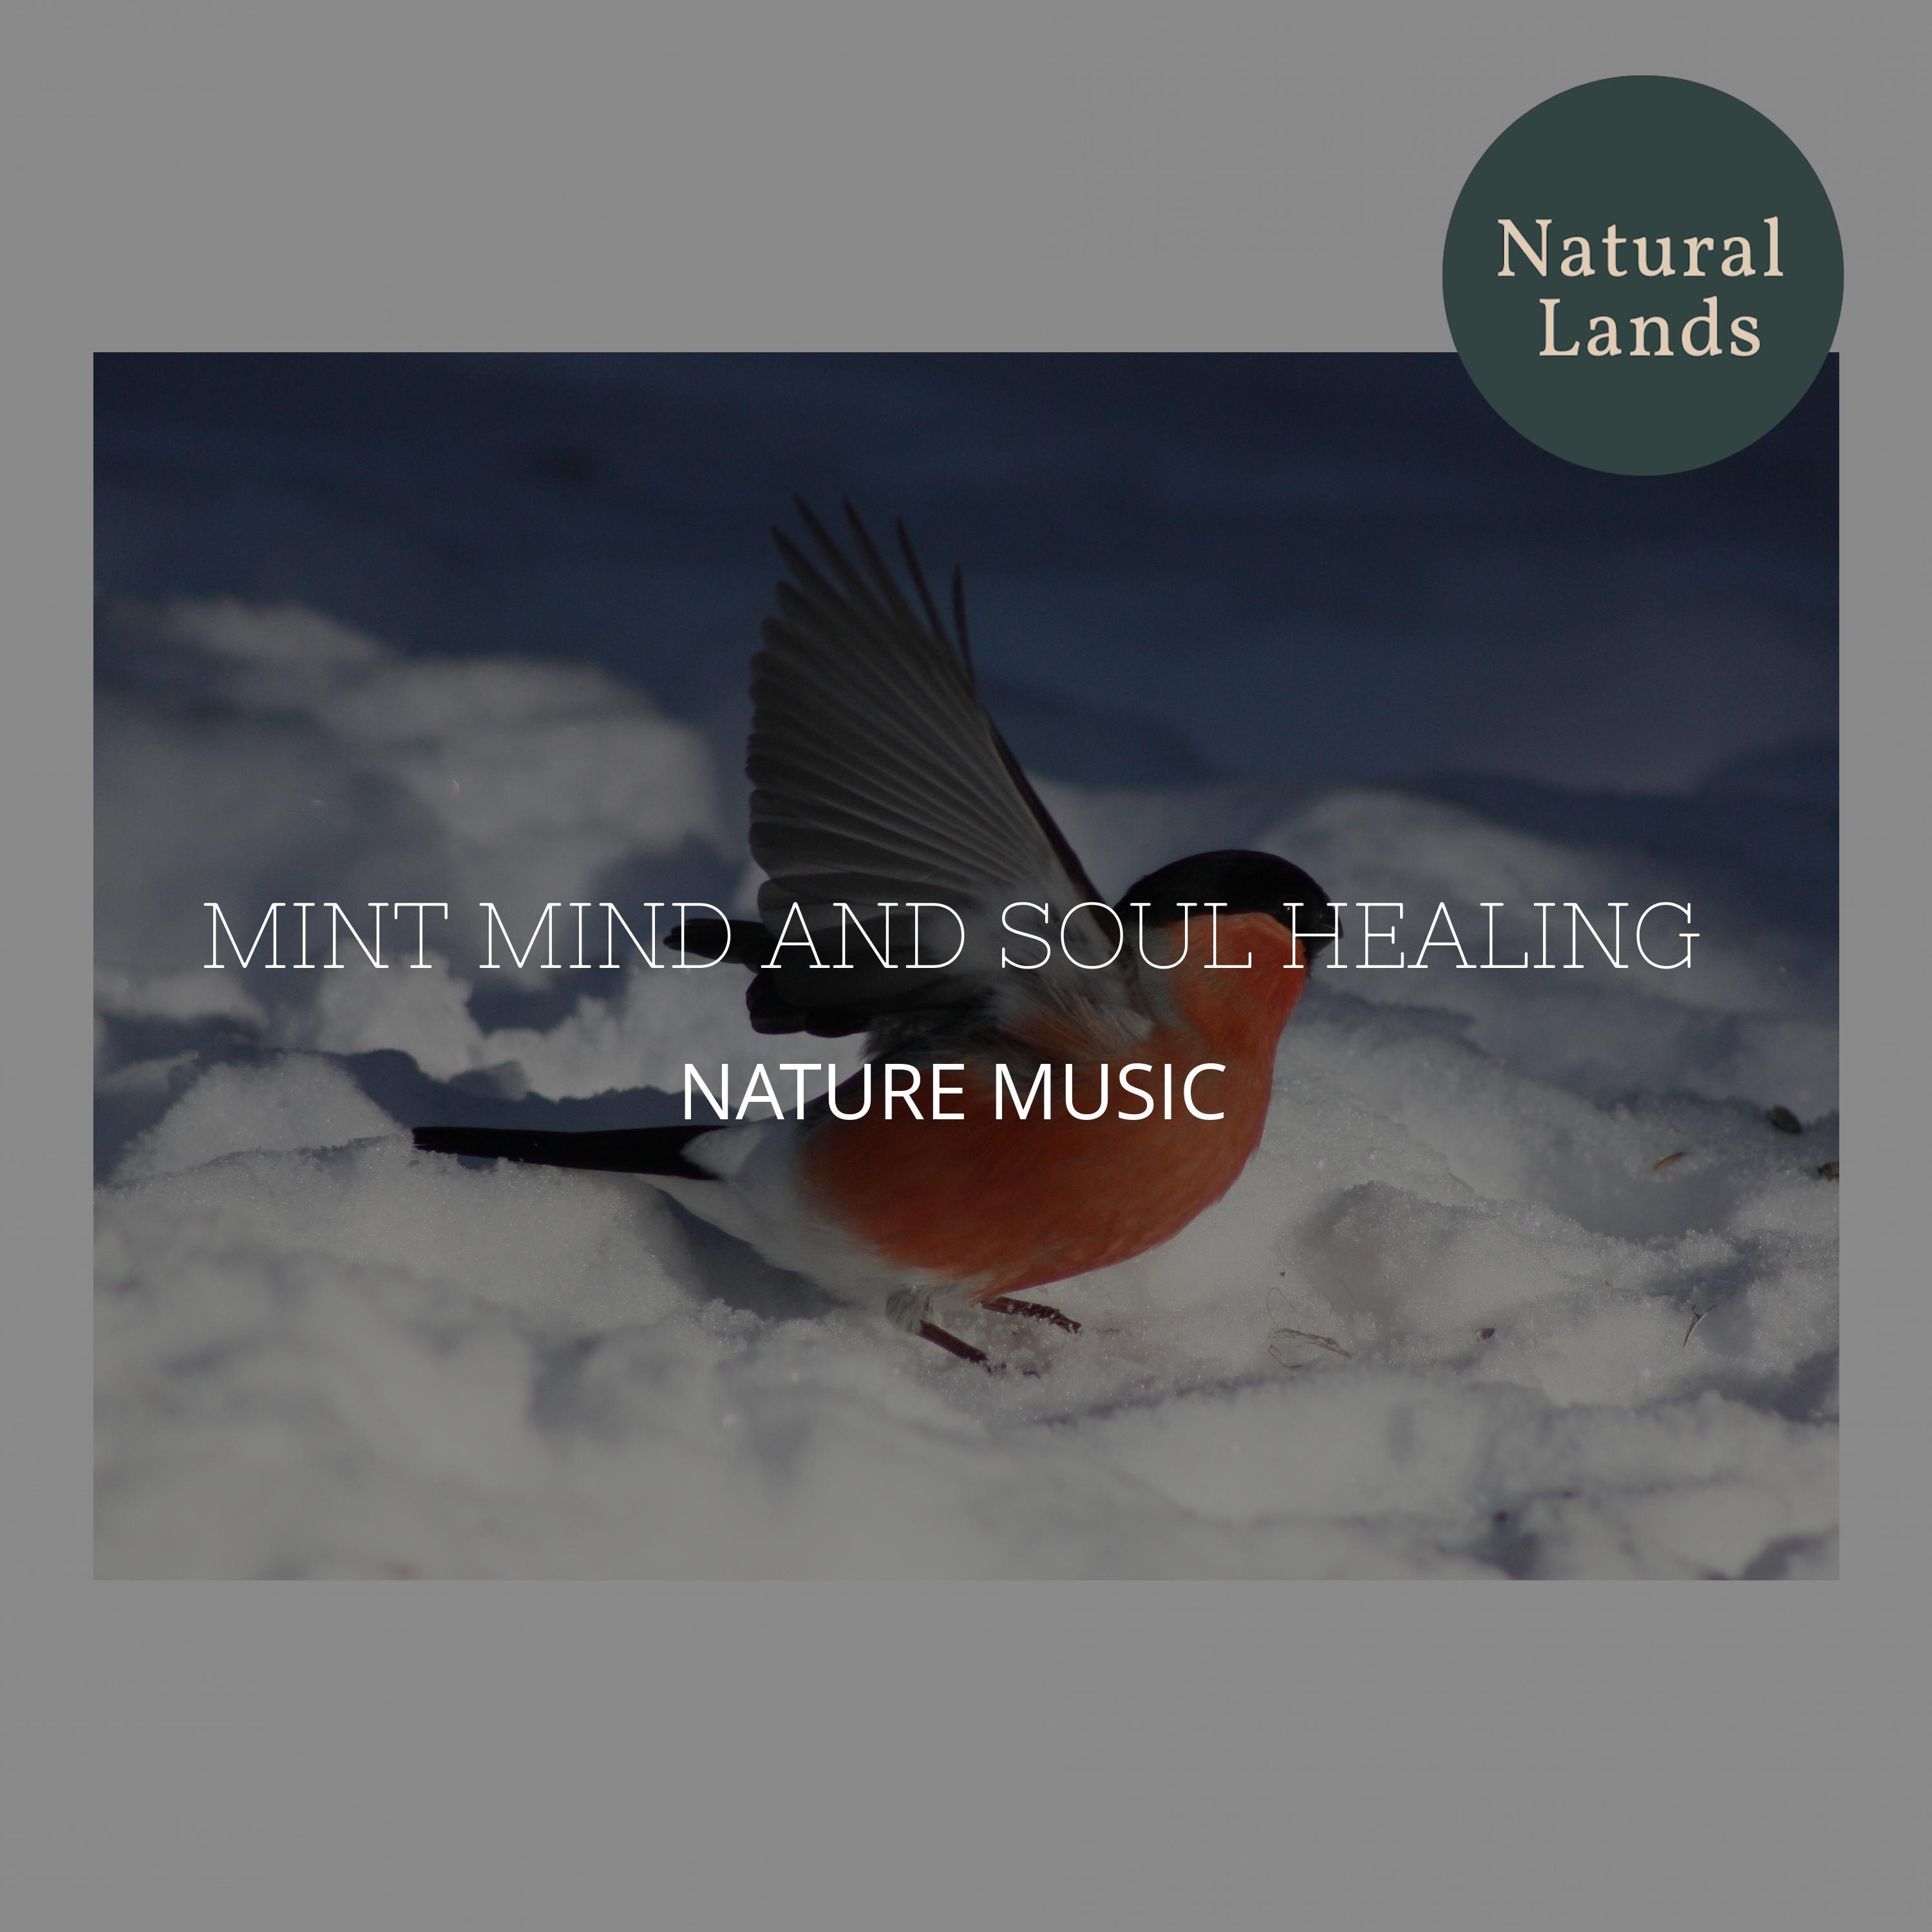 Passionate Healing Nature Music - The mystical calls of Carolina Wren